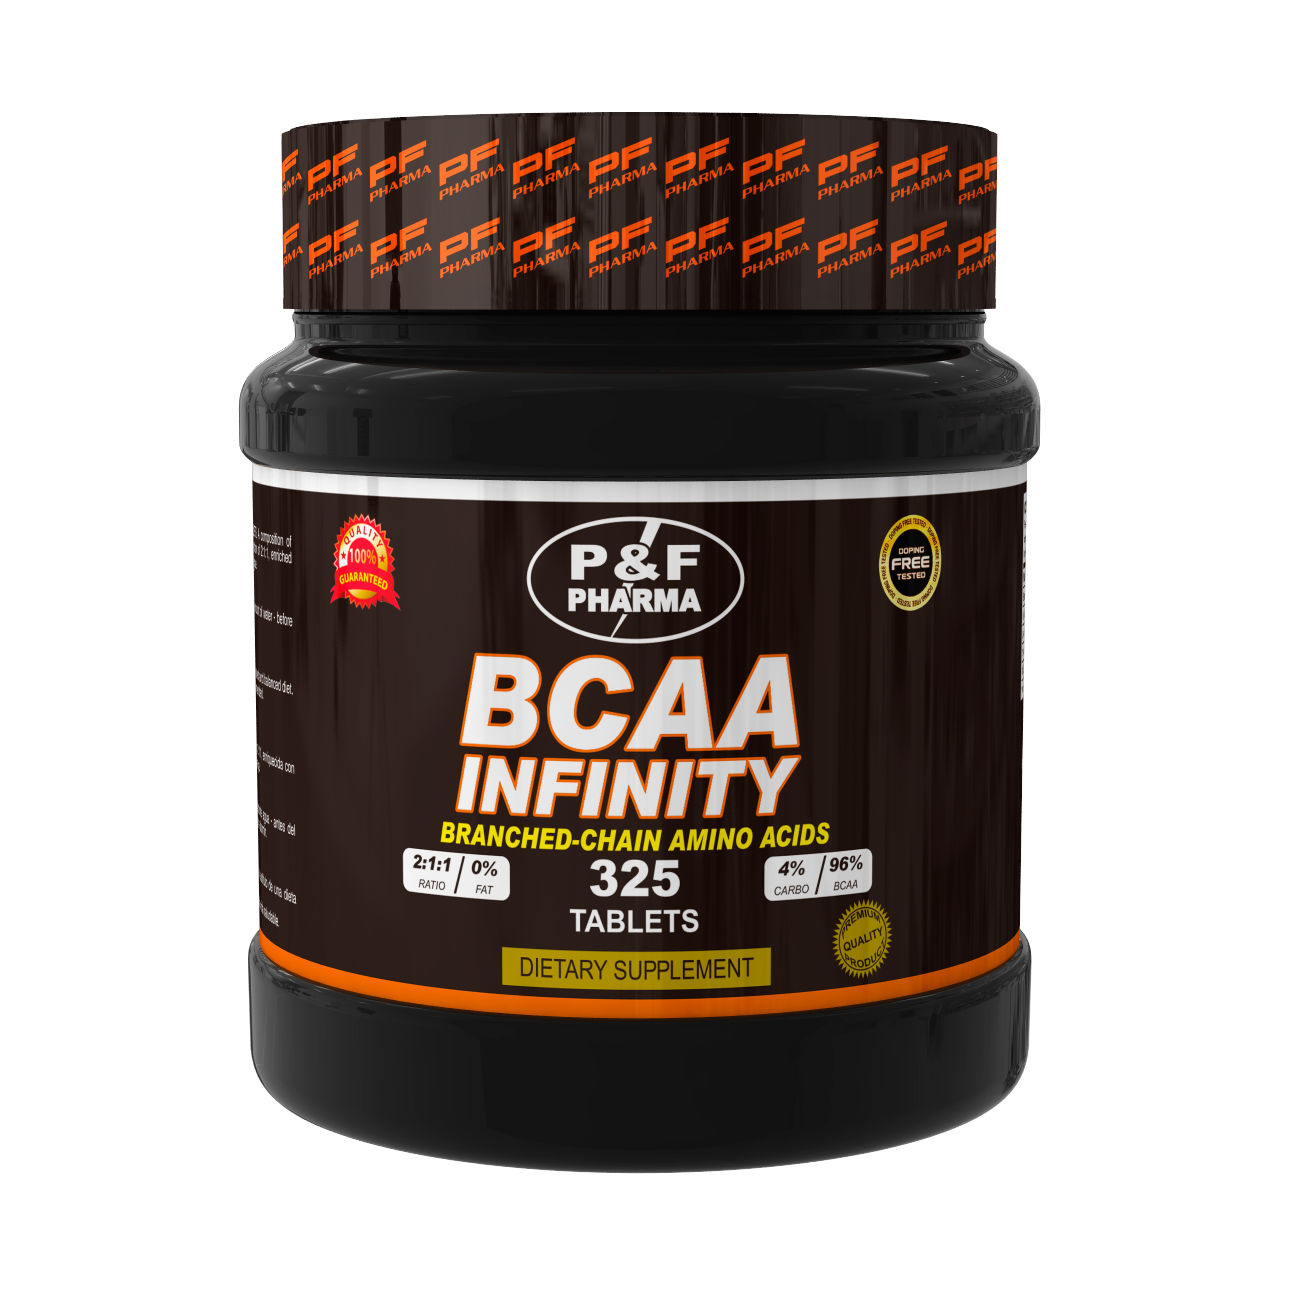 BCAA INFINITY